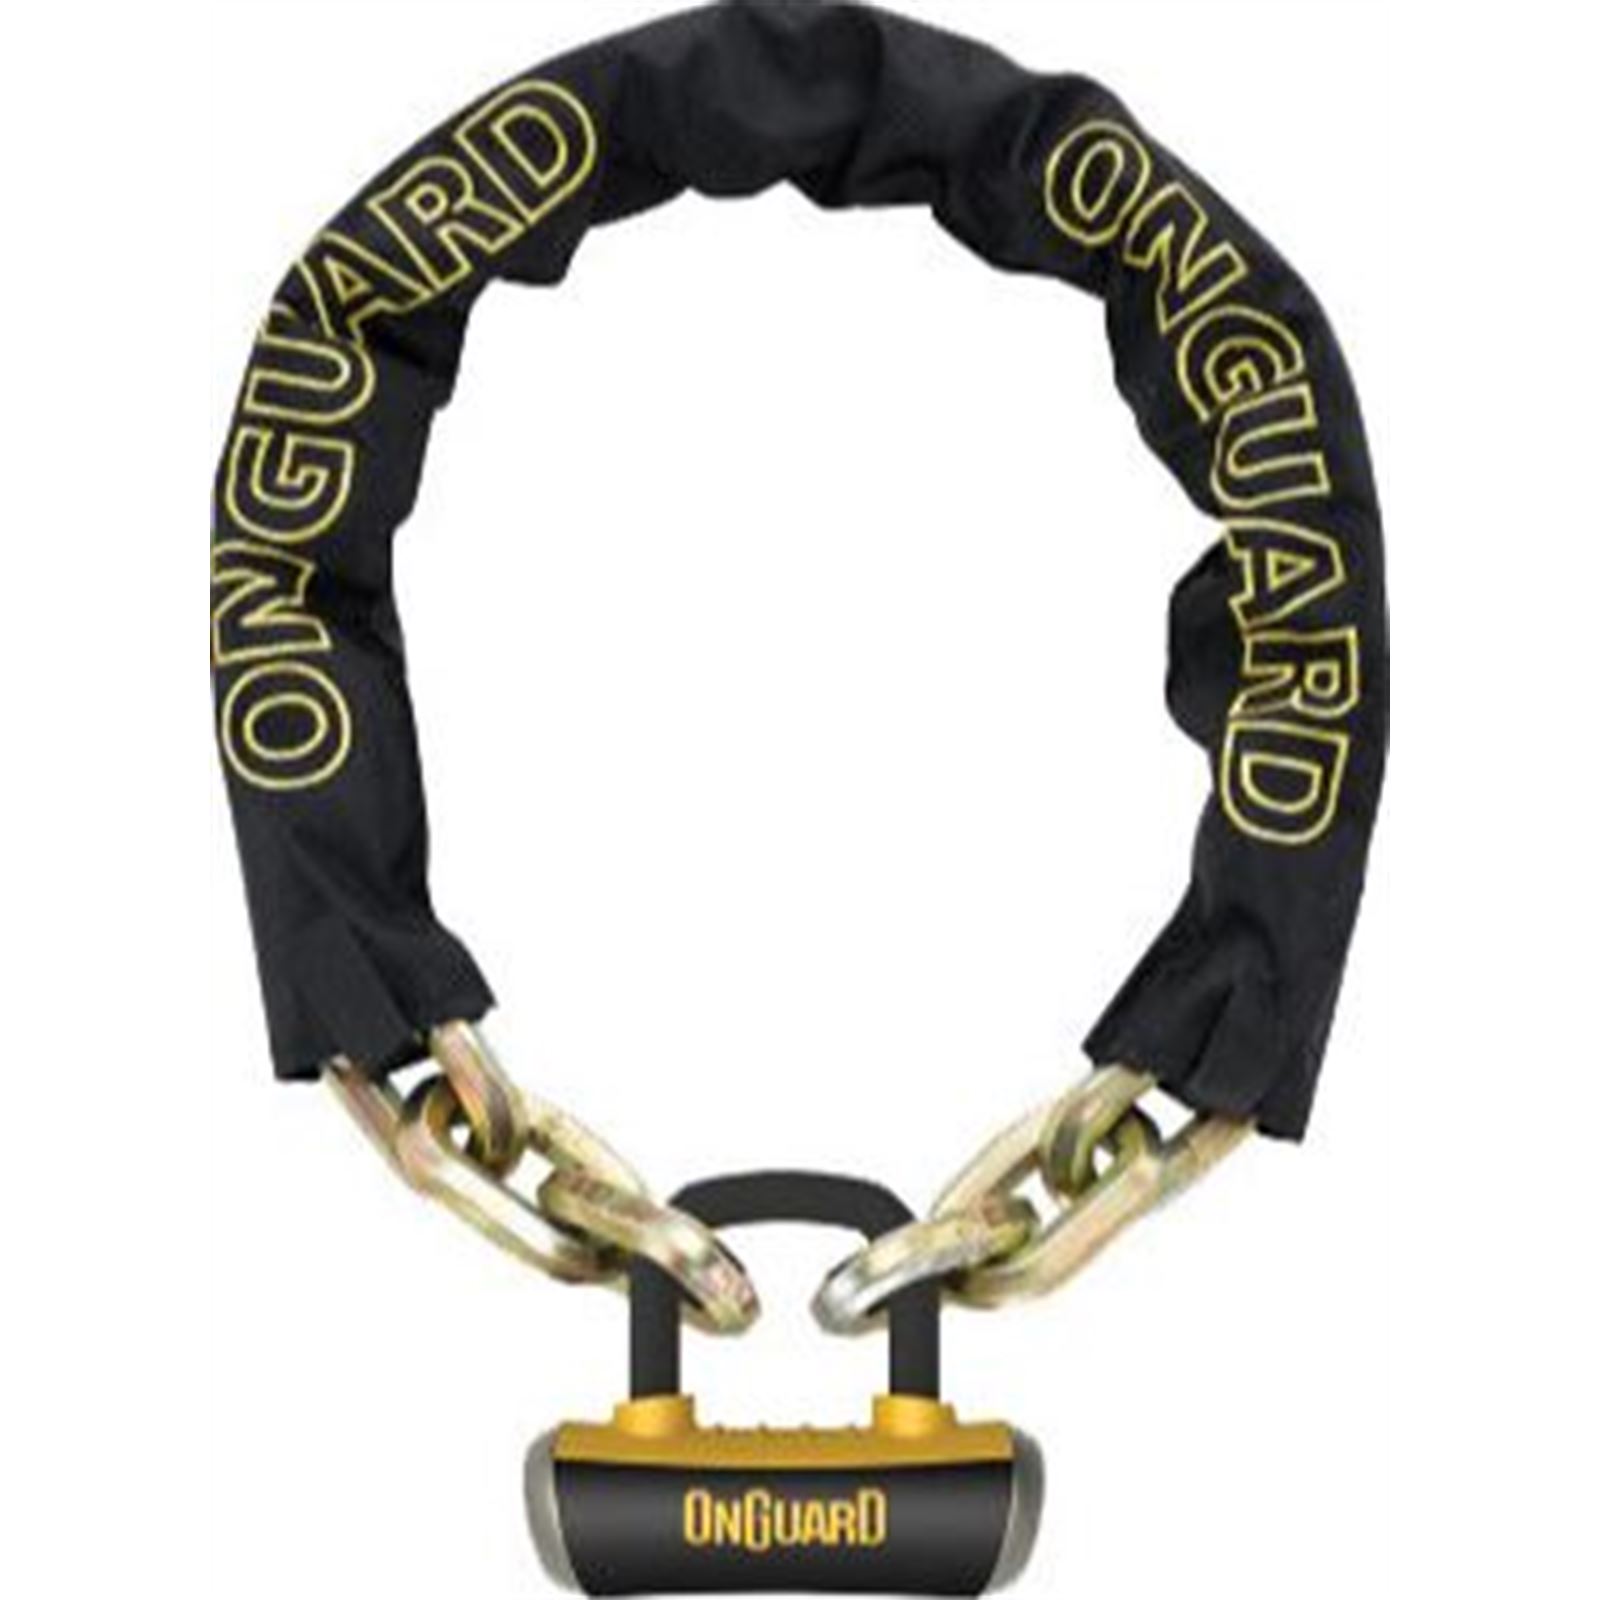 Onguard Beast 8016L Chain With U-Lock - Black/Yellow - 6'